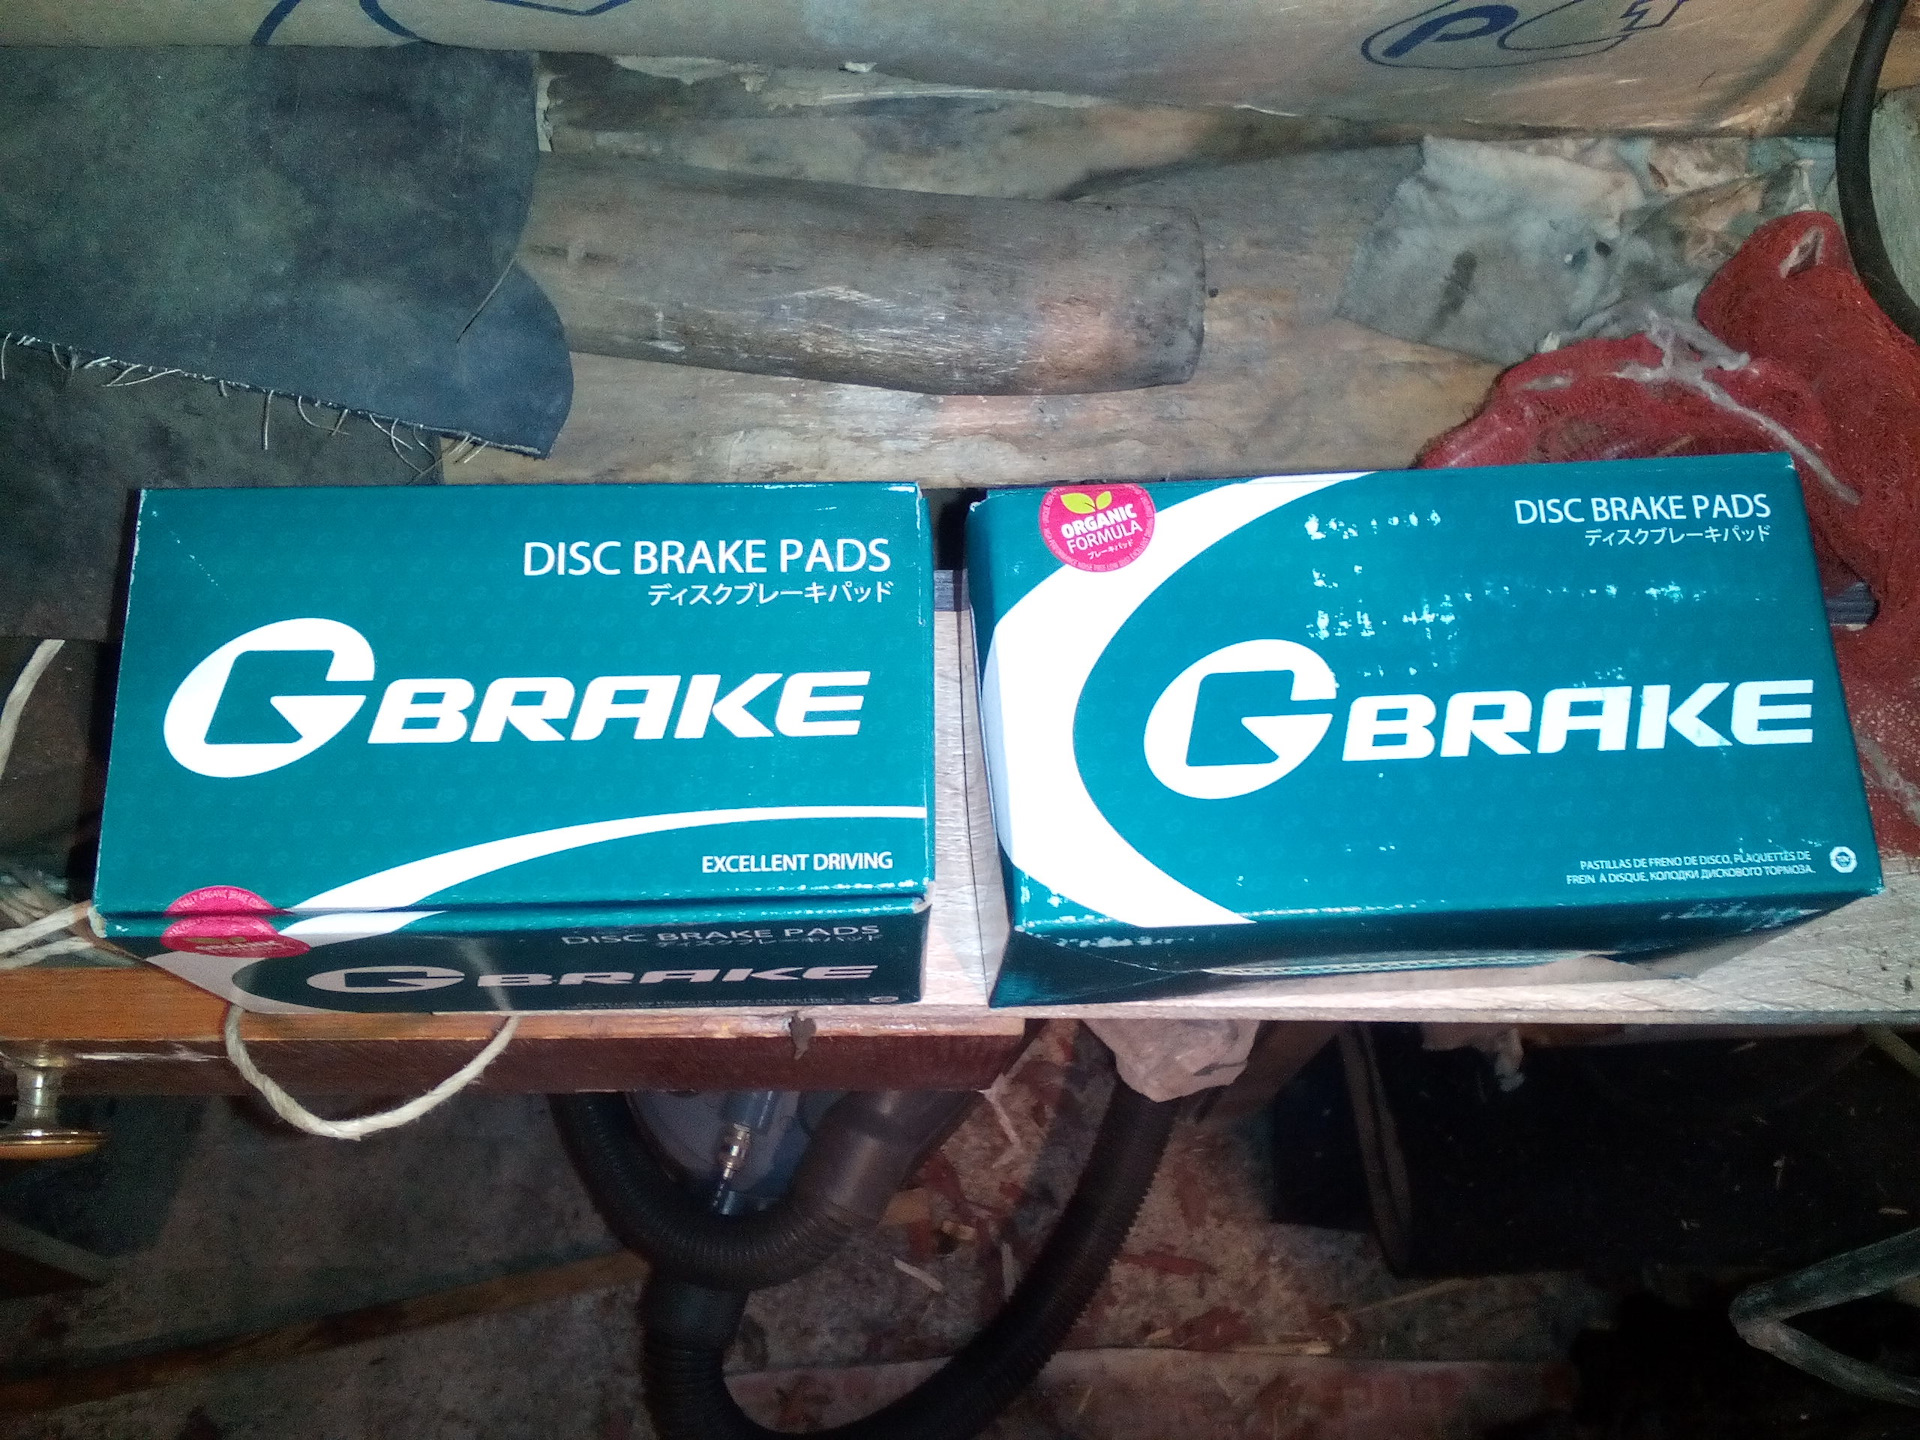 G brake производитель. Колодки g Brake фокус 2. G Brake тормозные колодки производитель. Тормозные колодки фирмы gbrak. G Brake тормозные колодки отзывы.